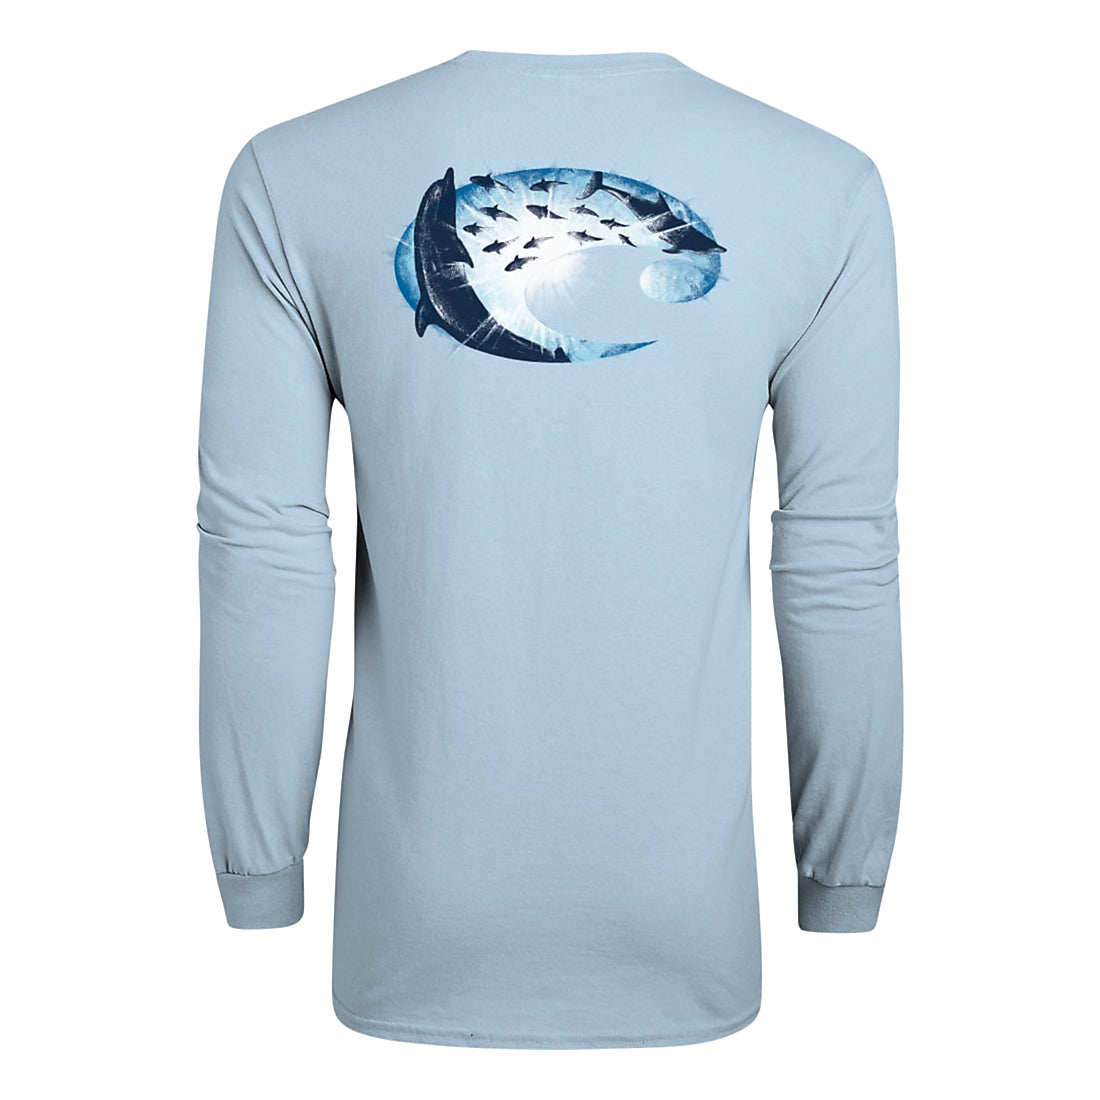 Costa Men's Dolphin Sunrays Long Sleeve T-Shirt from COSTA - CHAOS Fishing